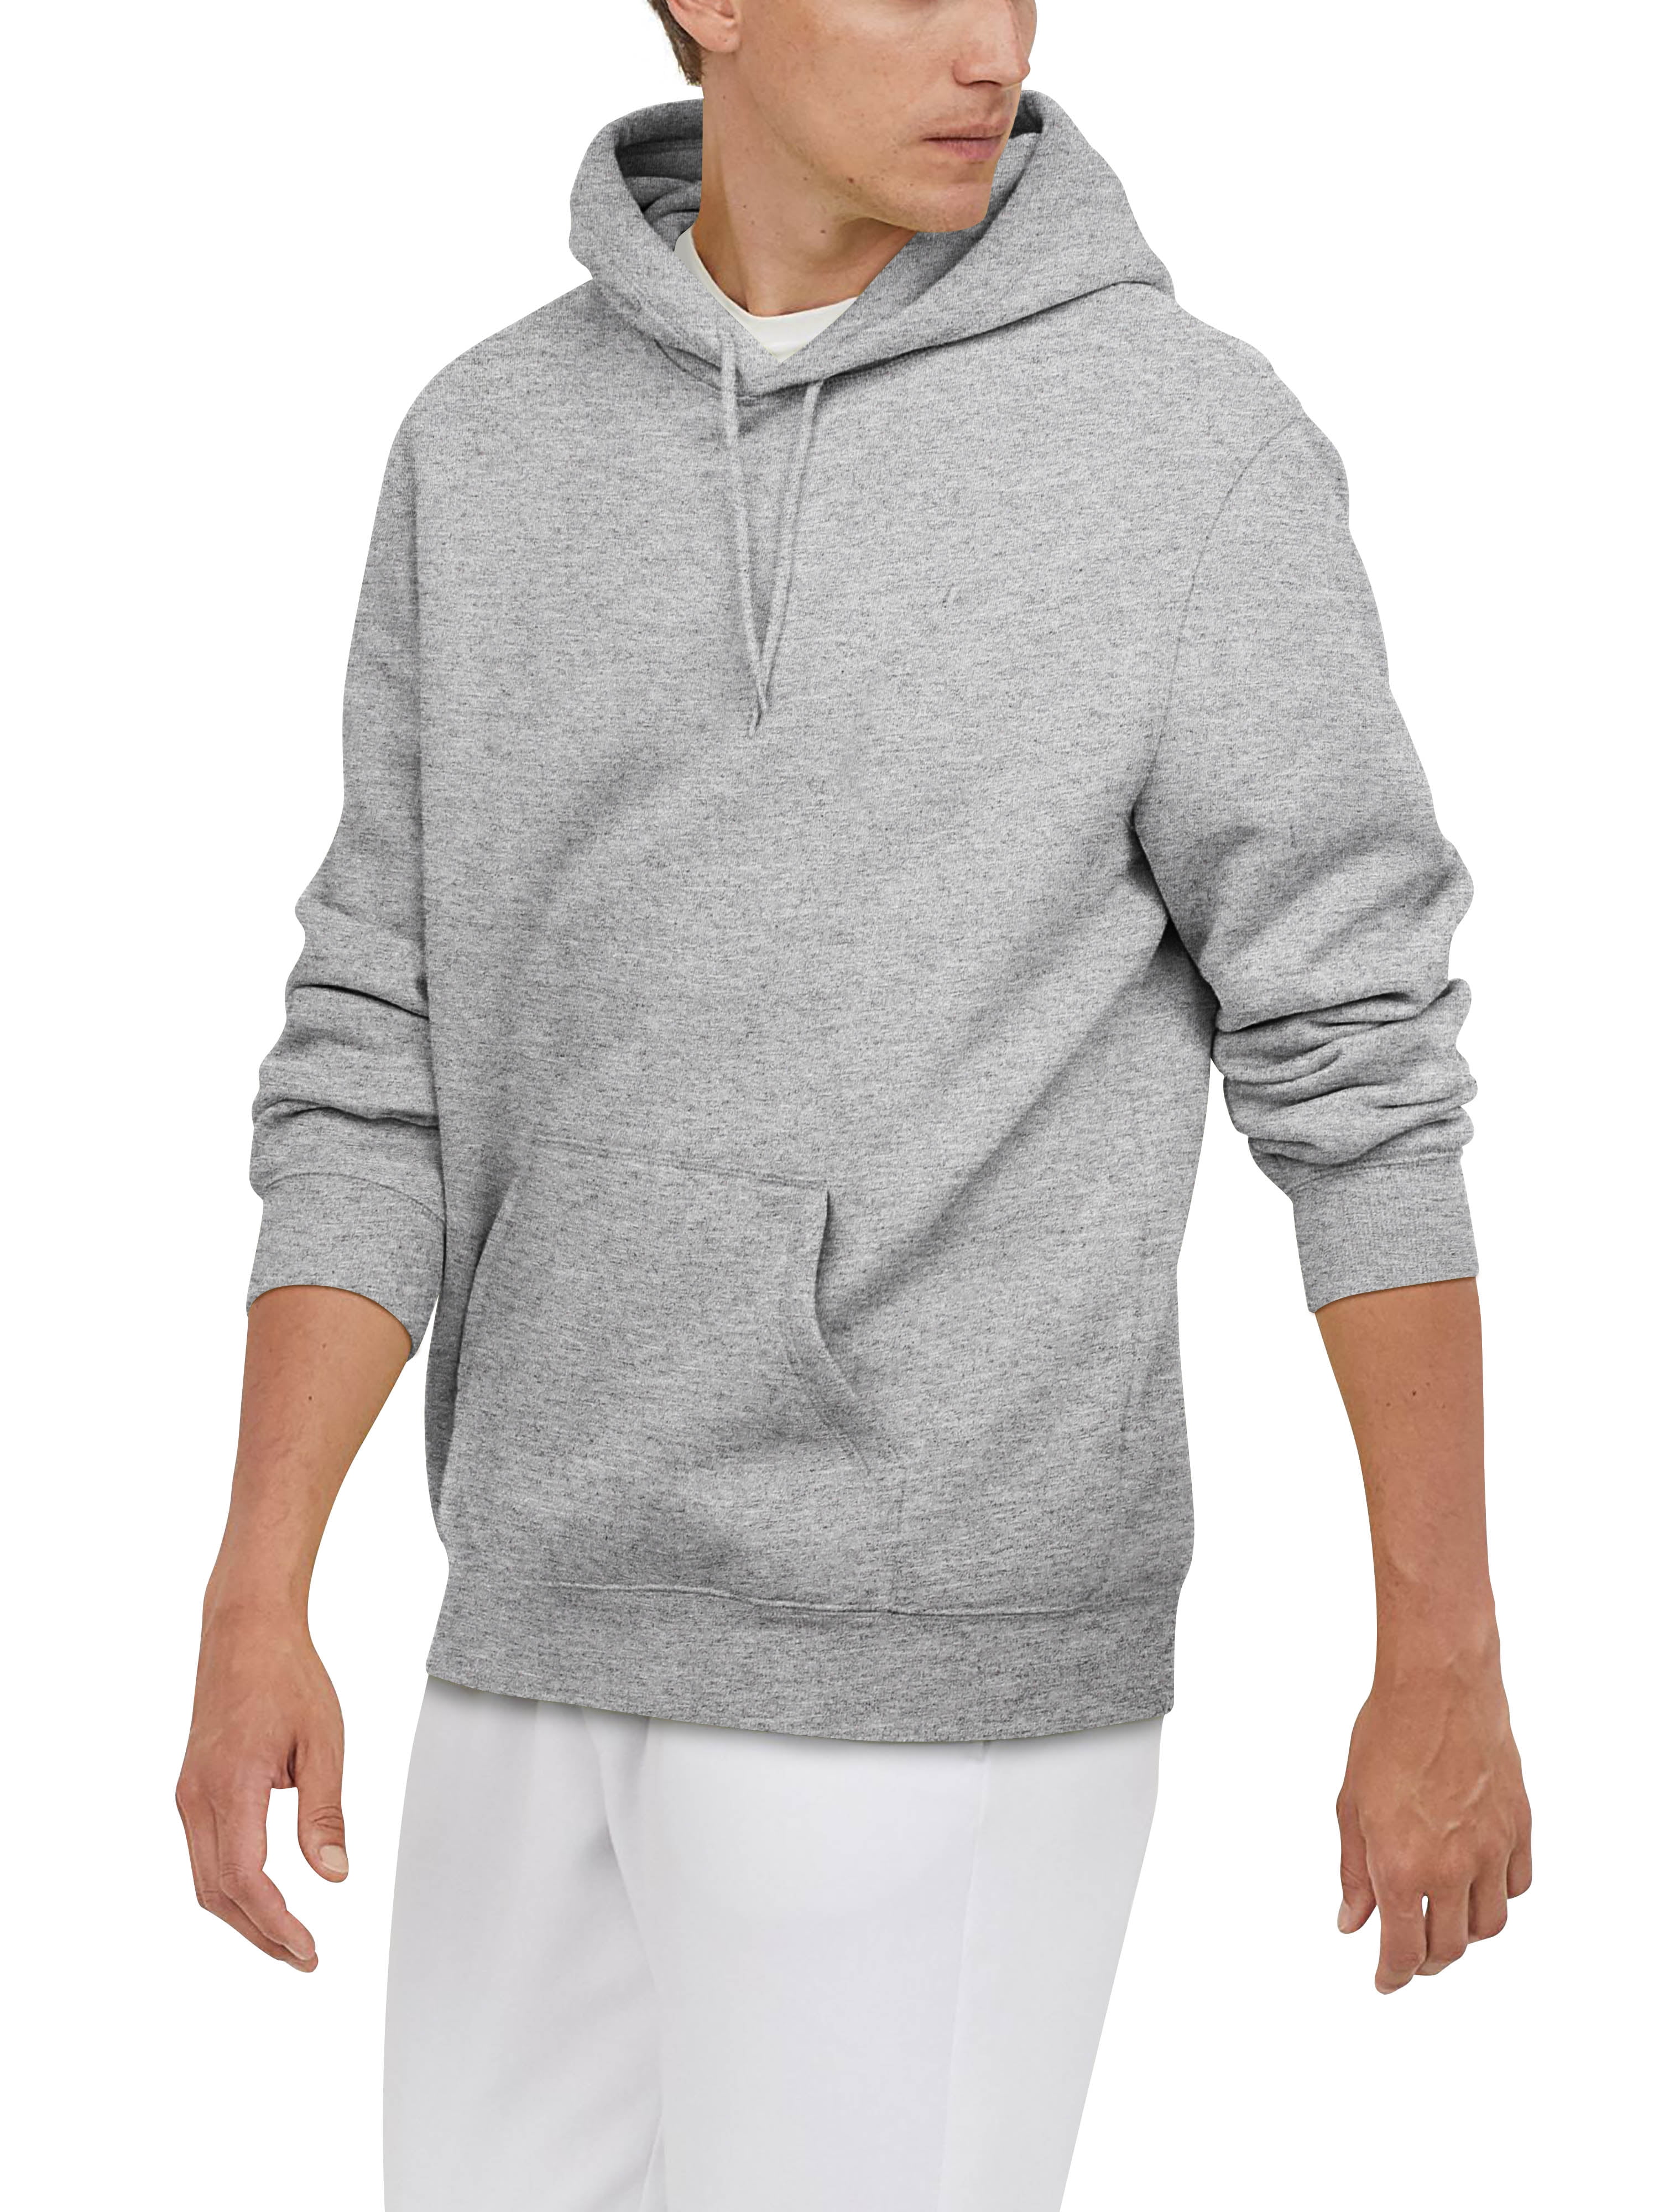 Ultra Game Boys' Soft Fleece Pullover Hoodie Sweatshirt